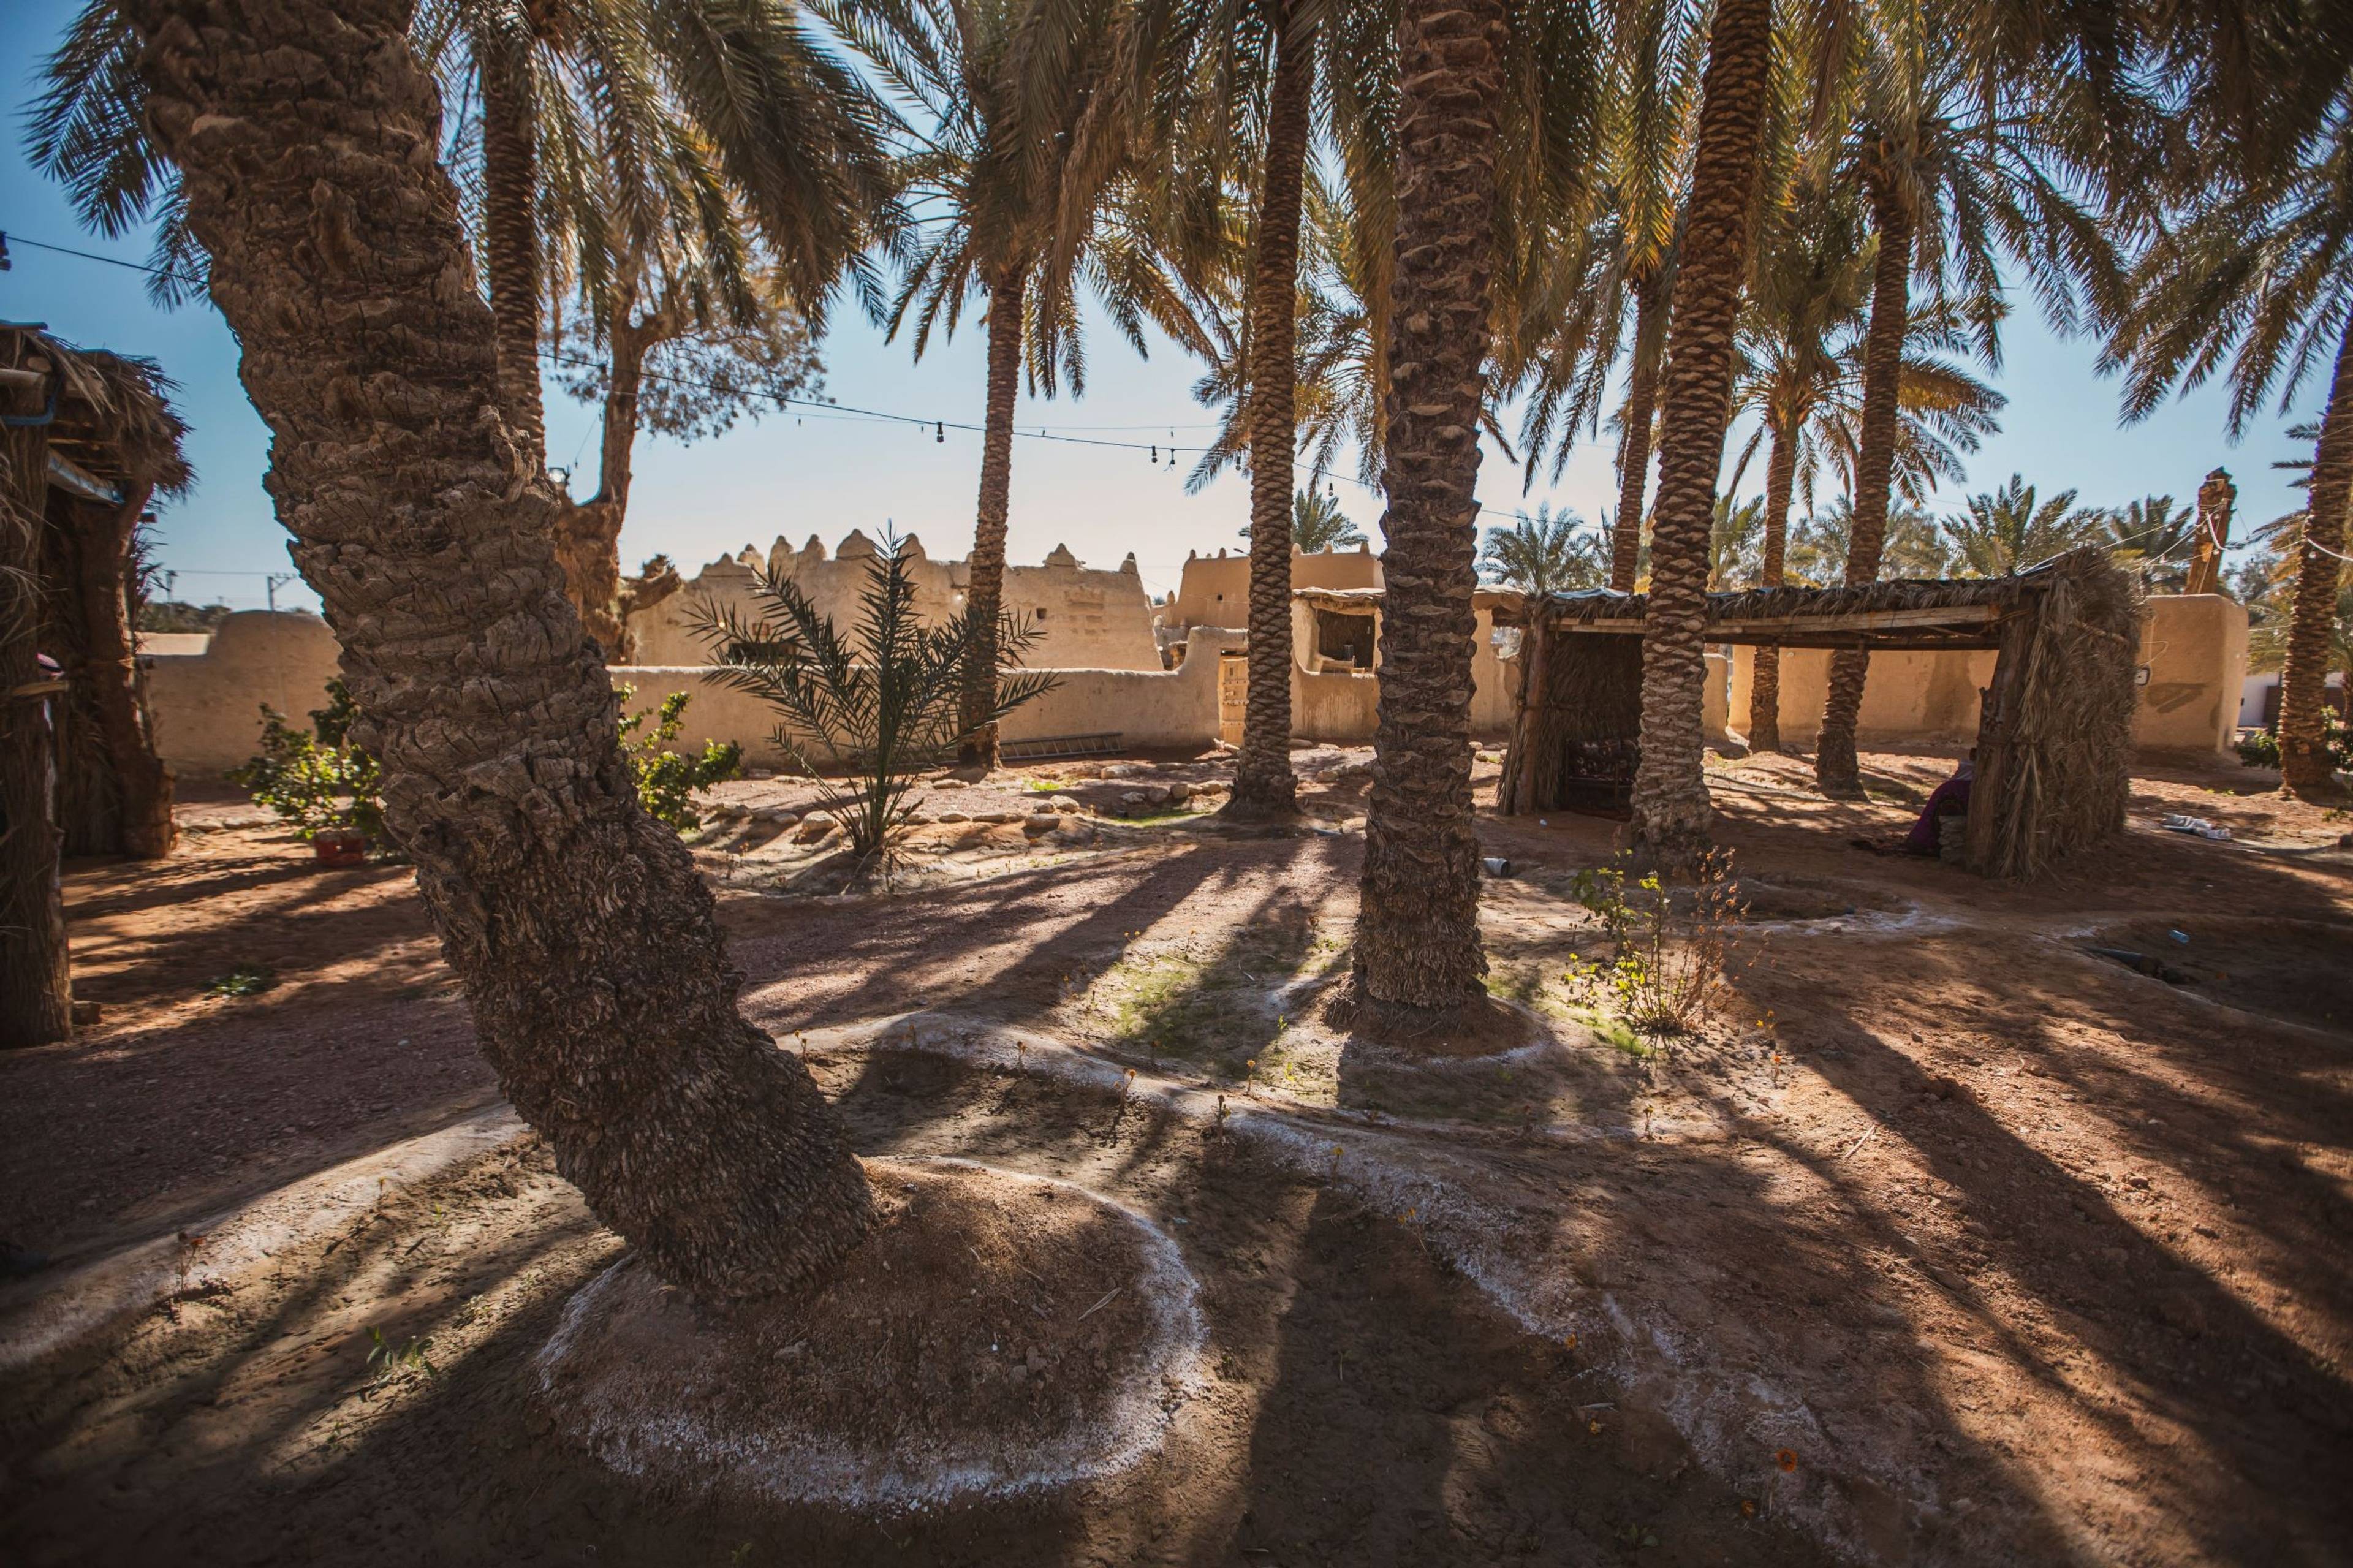 The Old Deira